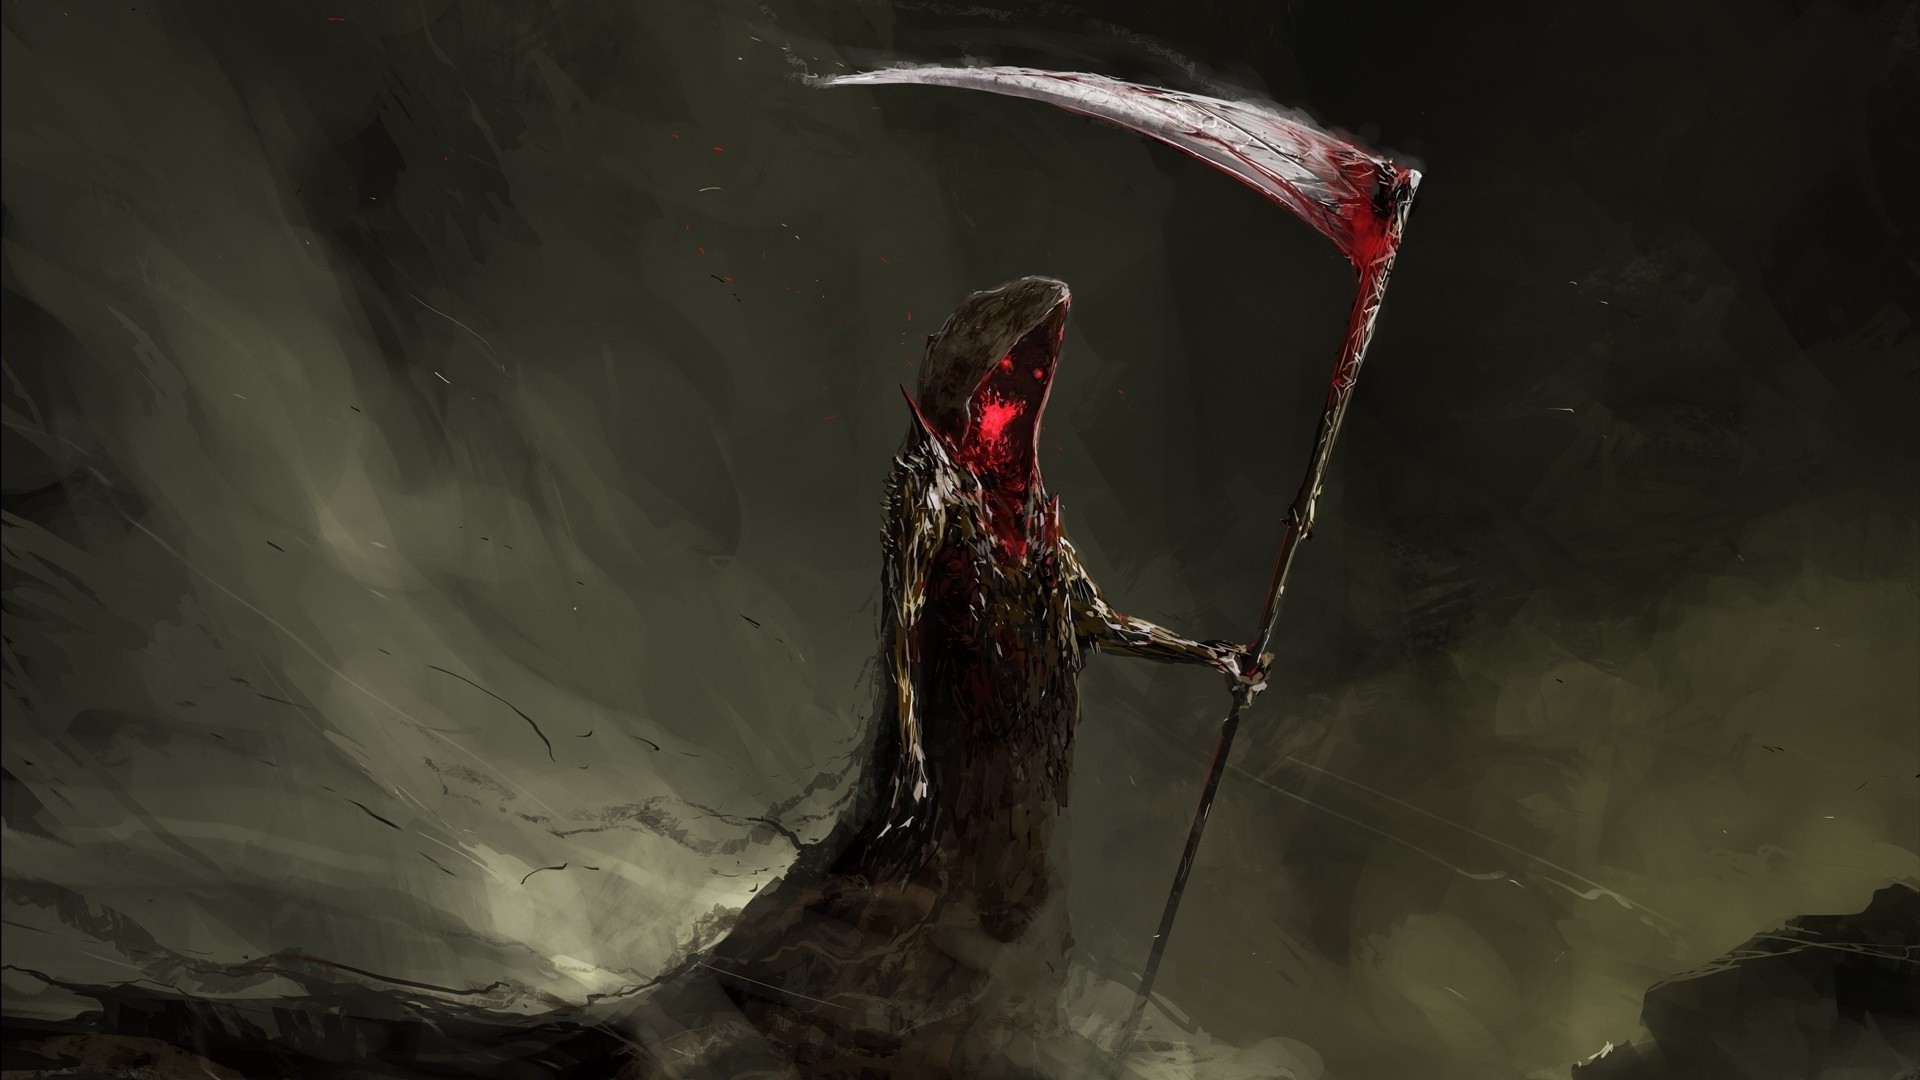 death grim reaper scythe or sickle